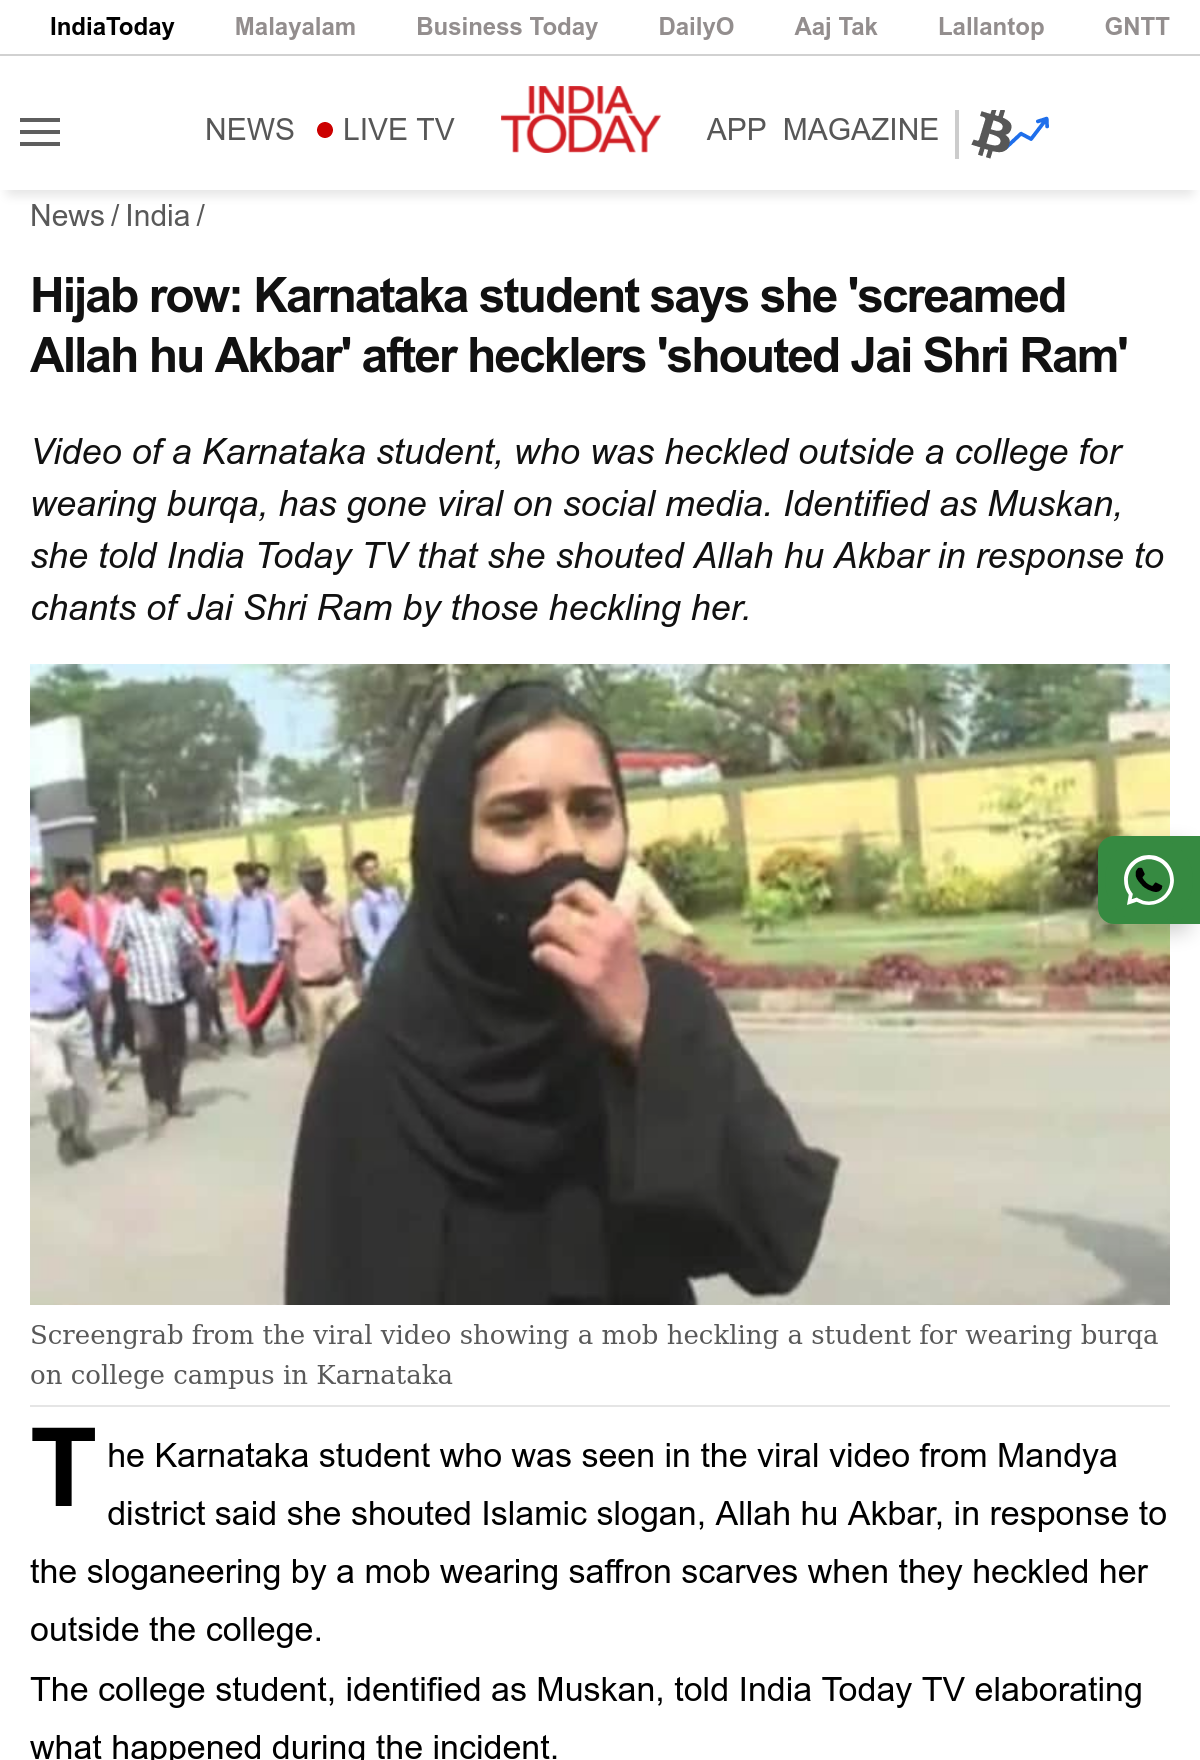 India Today - In Hijab row, Karnataka student screamed Allah-hu-Akbar